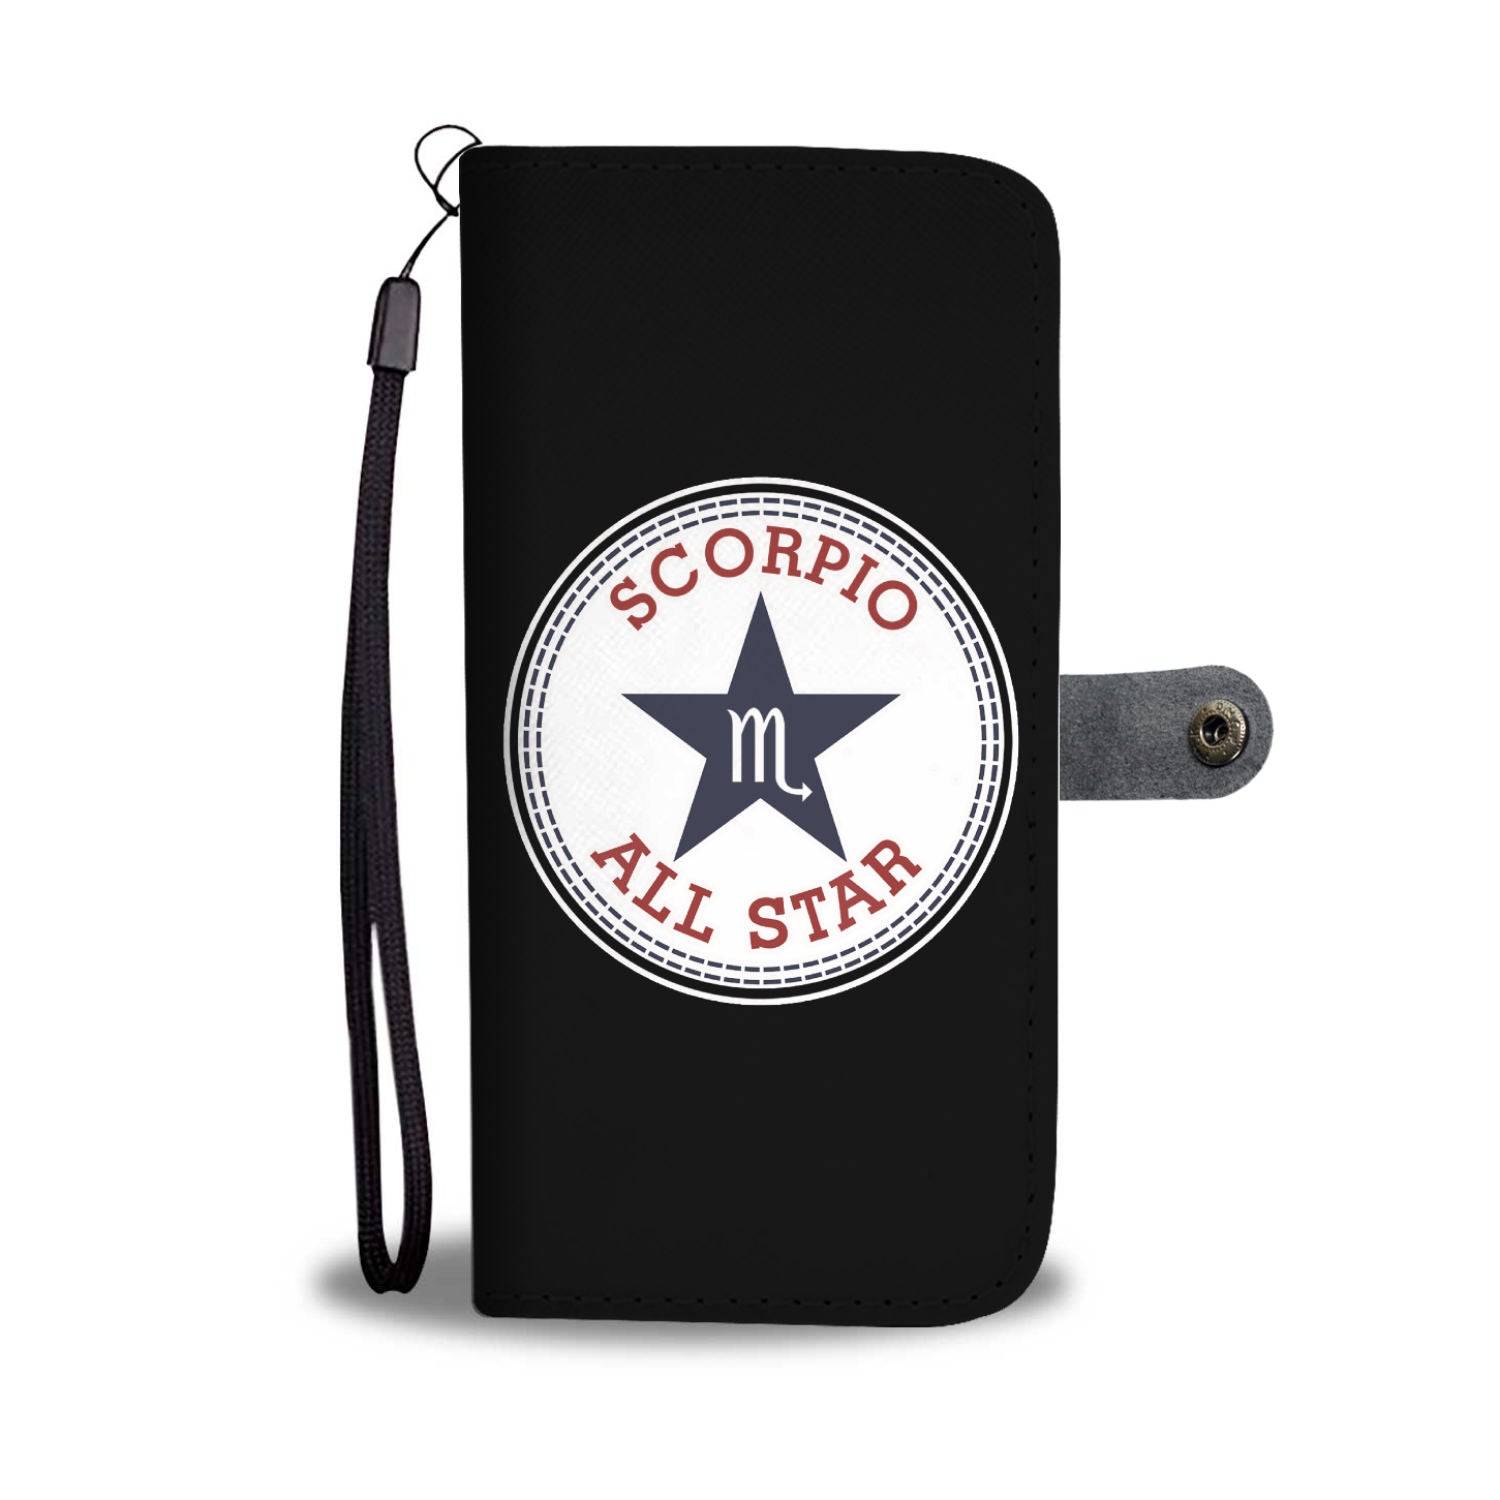 Scorpio All Star Phone Wallet